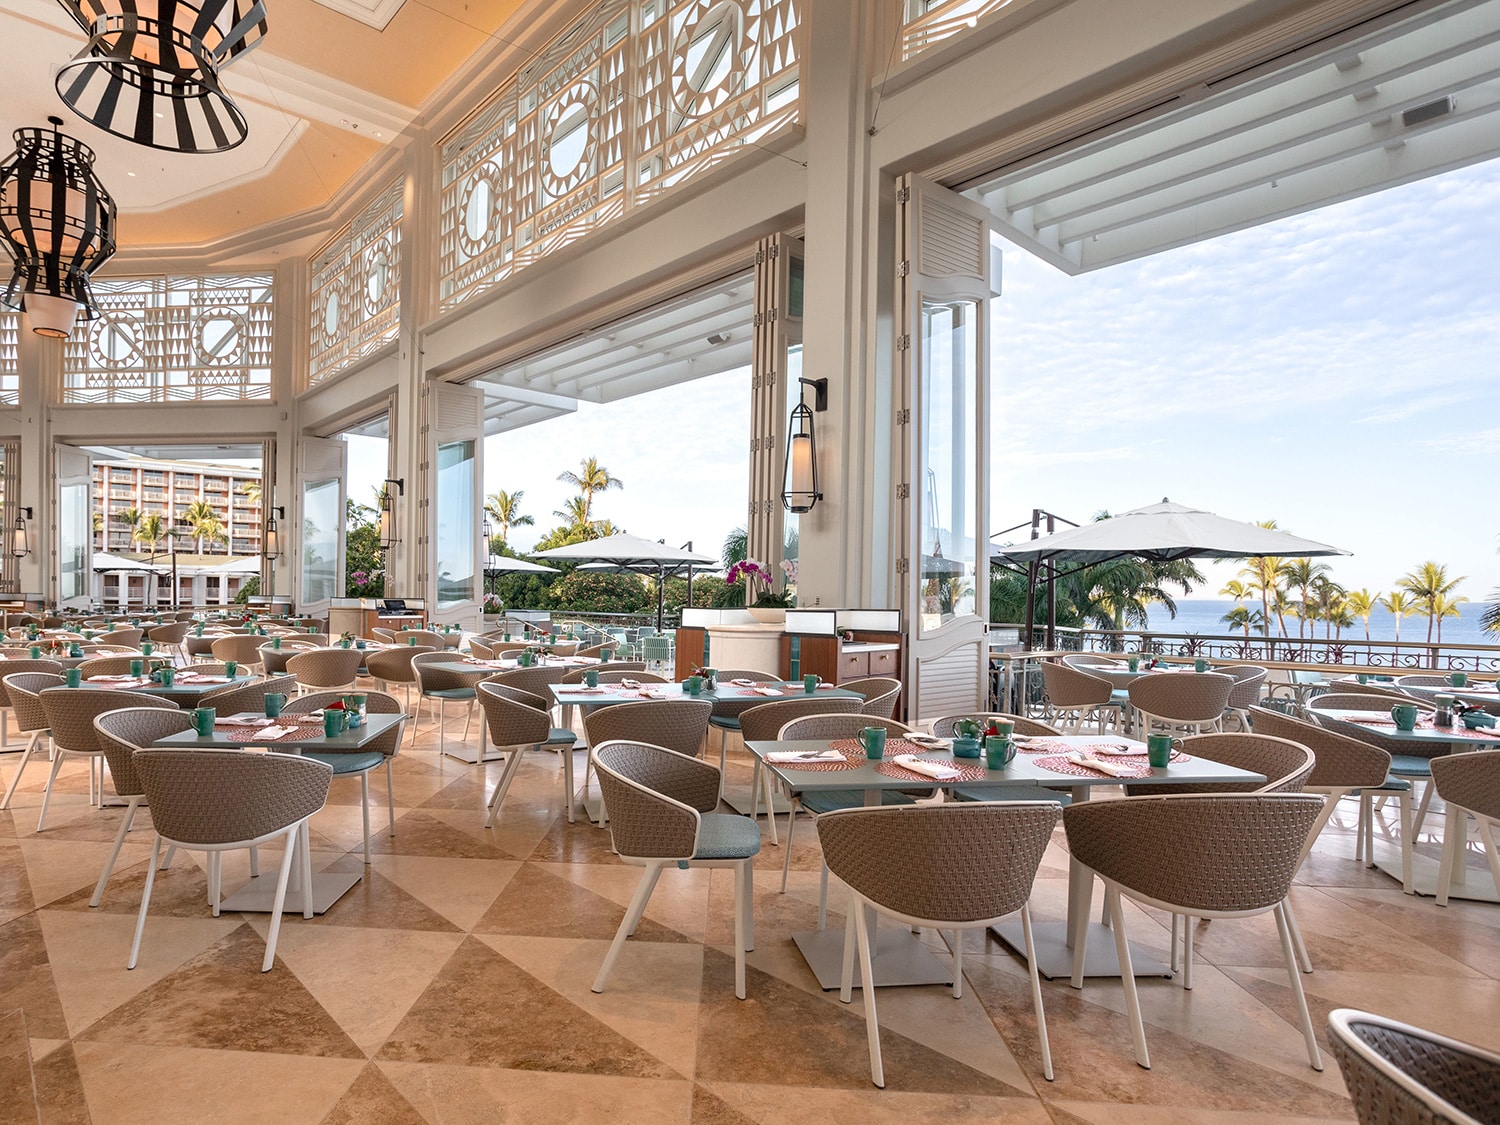 The newly renovated breakfast restaurant Ikena at the Grand Wailea Maui, A Waldorf Astoria Resort.